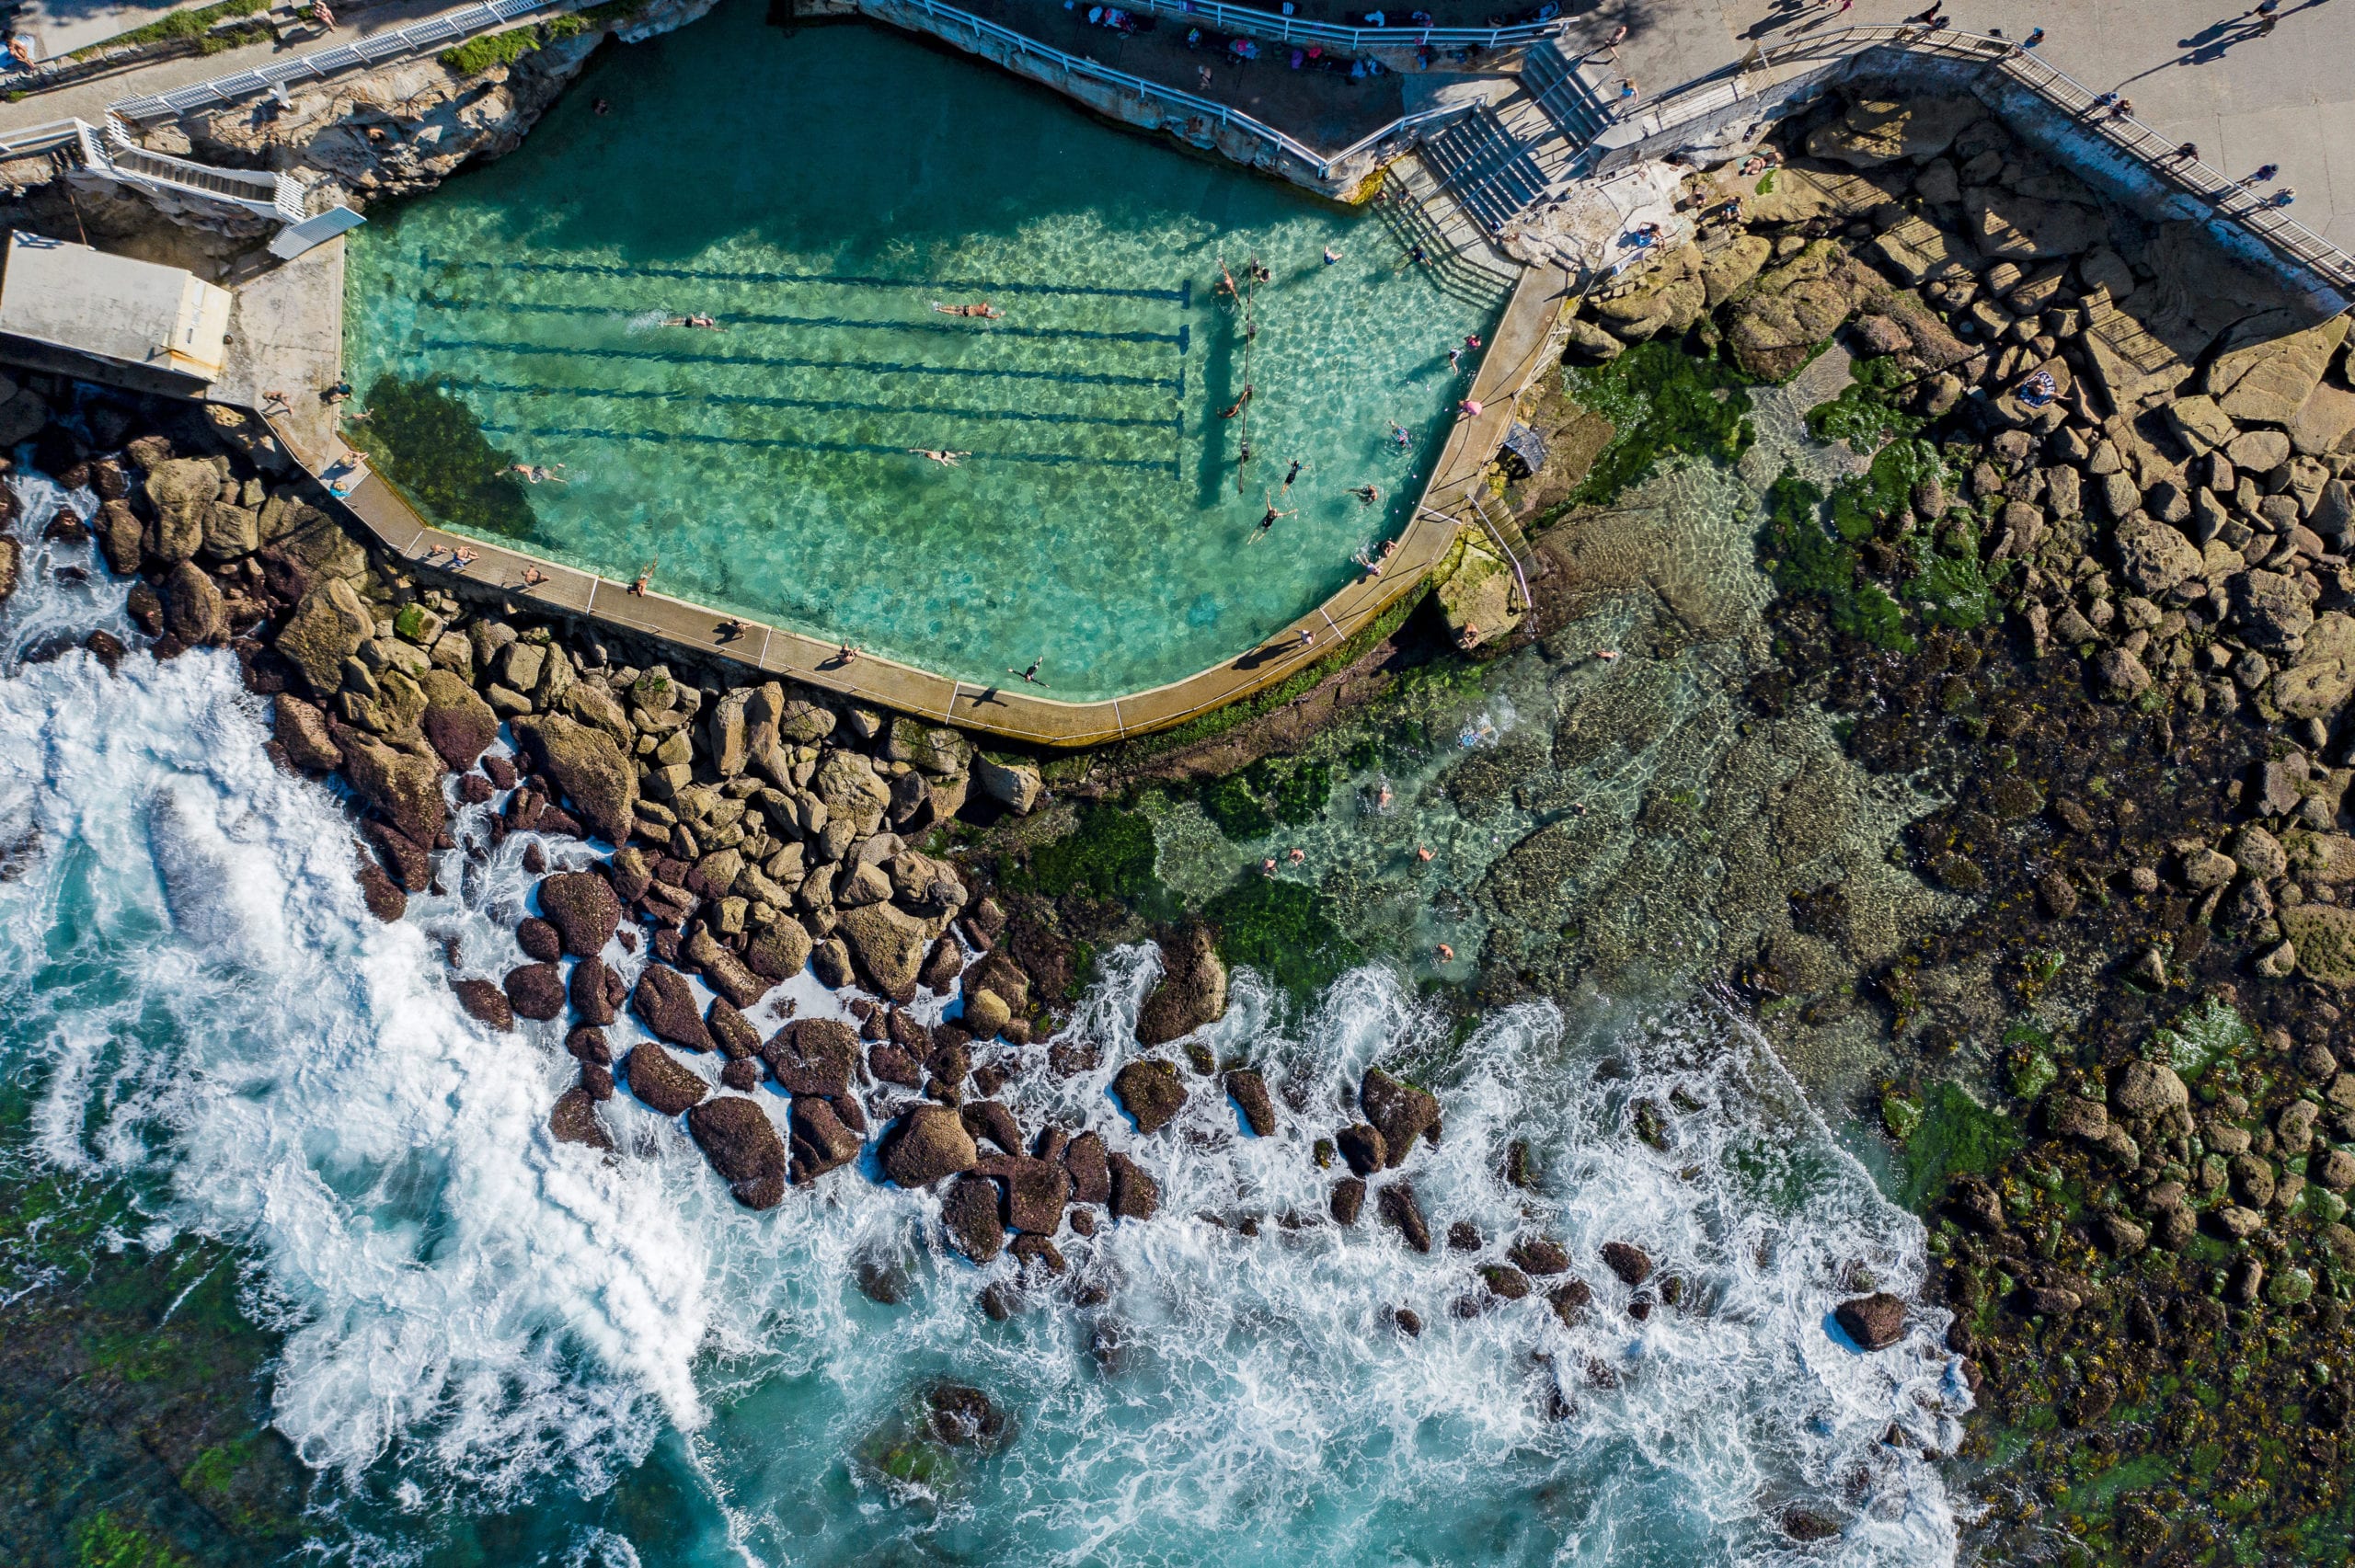 Sydney’s best swimming spots: 5 hidden gems you have to visit